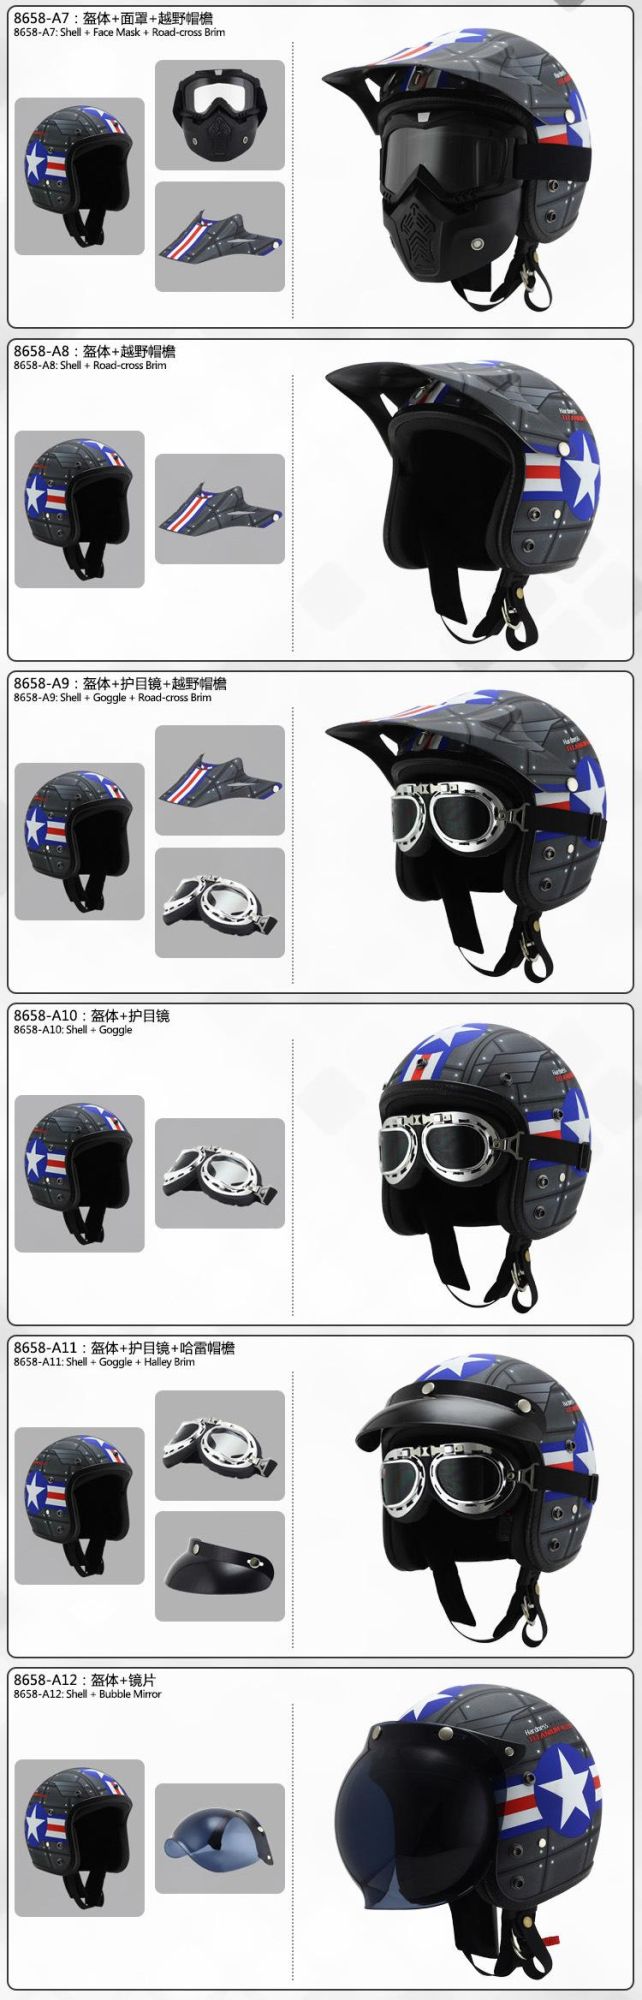 Fast Tactical Helmet, Military Helmet, Ballistic Helmet